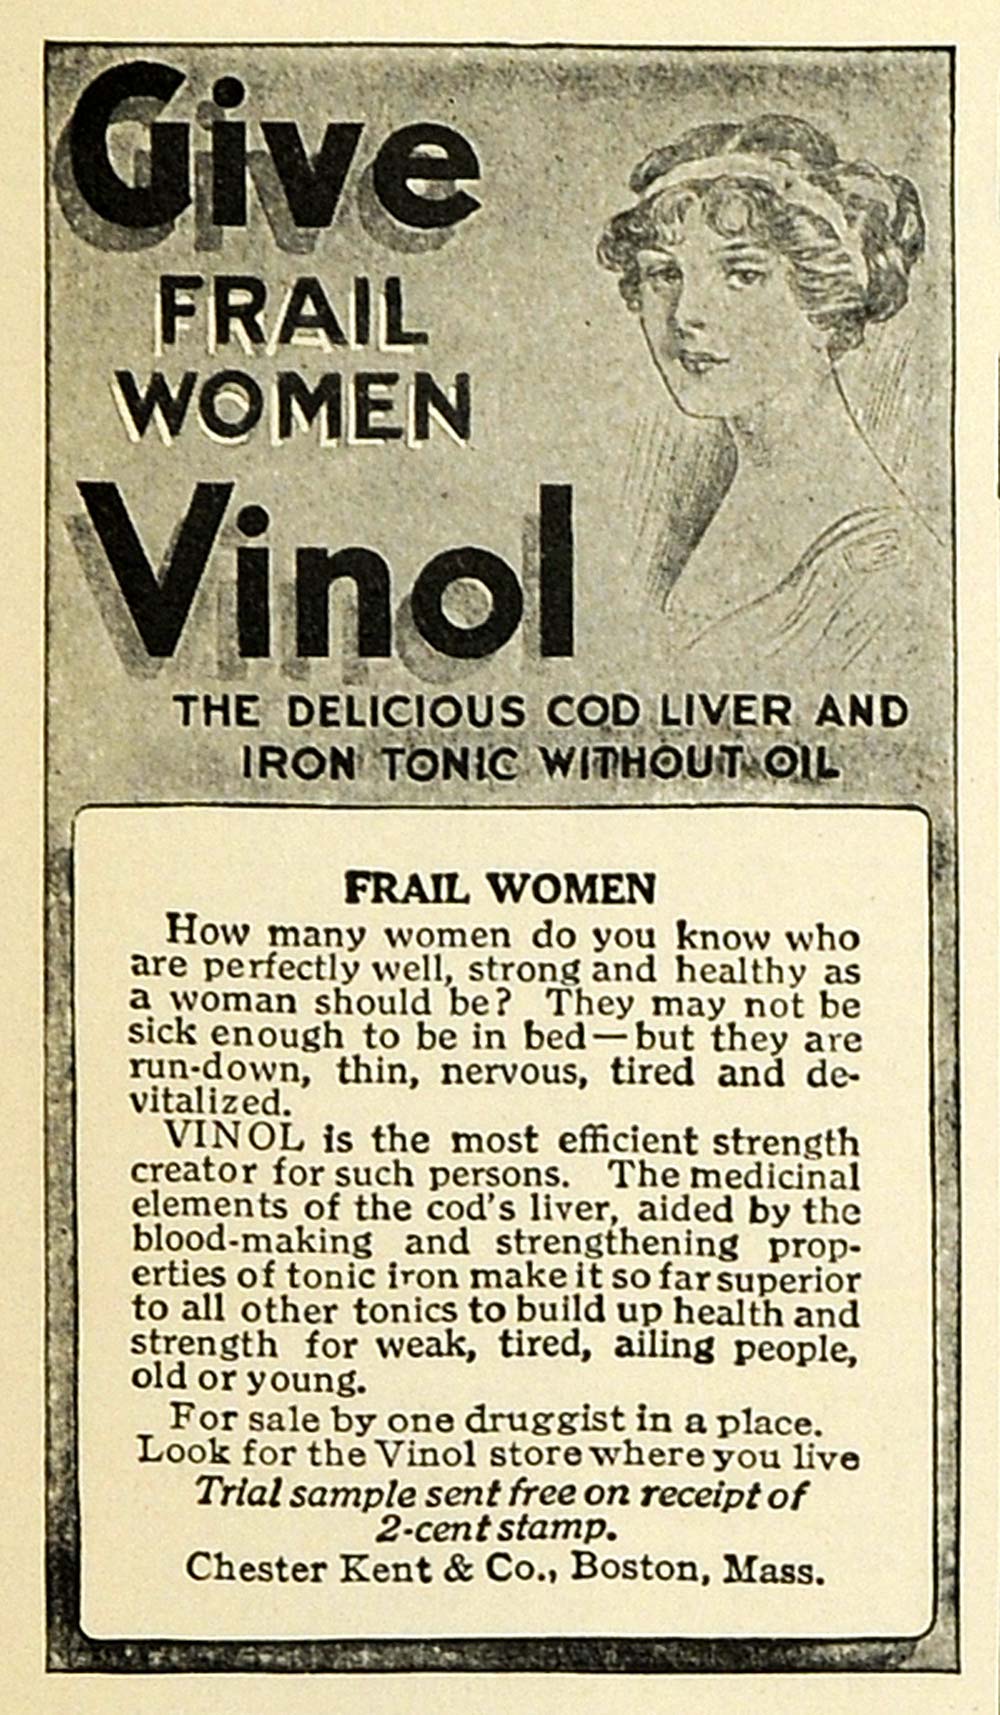 1914 Ad Chester Kent Boston Vinol Cod Liver Iron Tonic Health Products TMP2